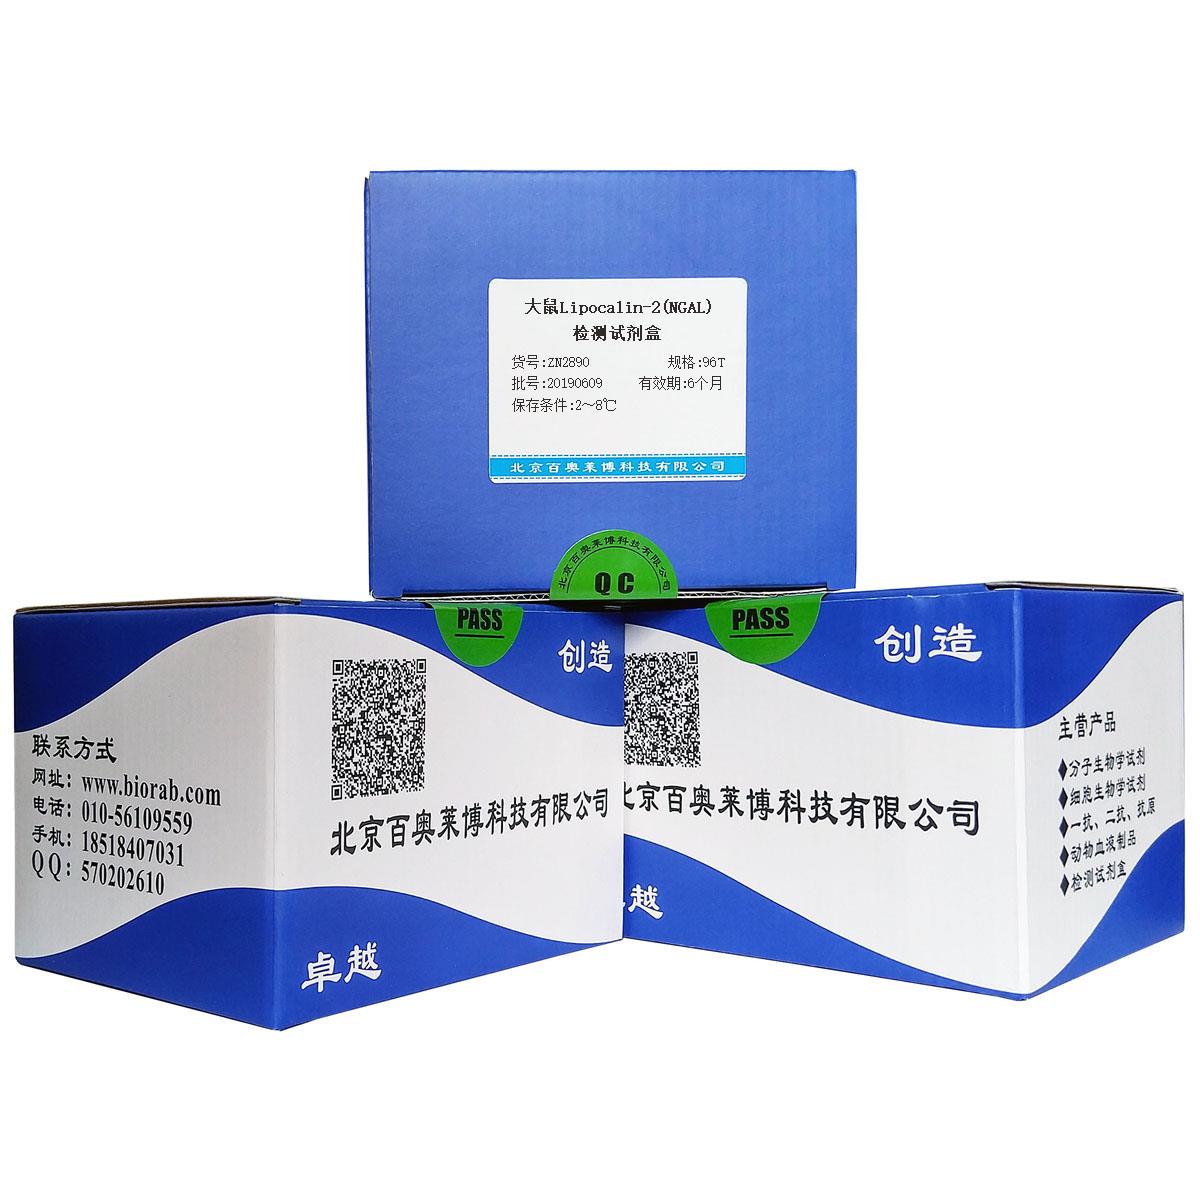 大鼠Lipocalin-2(NGAL)检测试剂盒